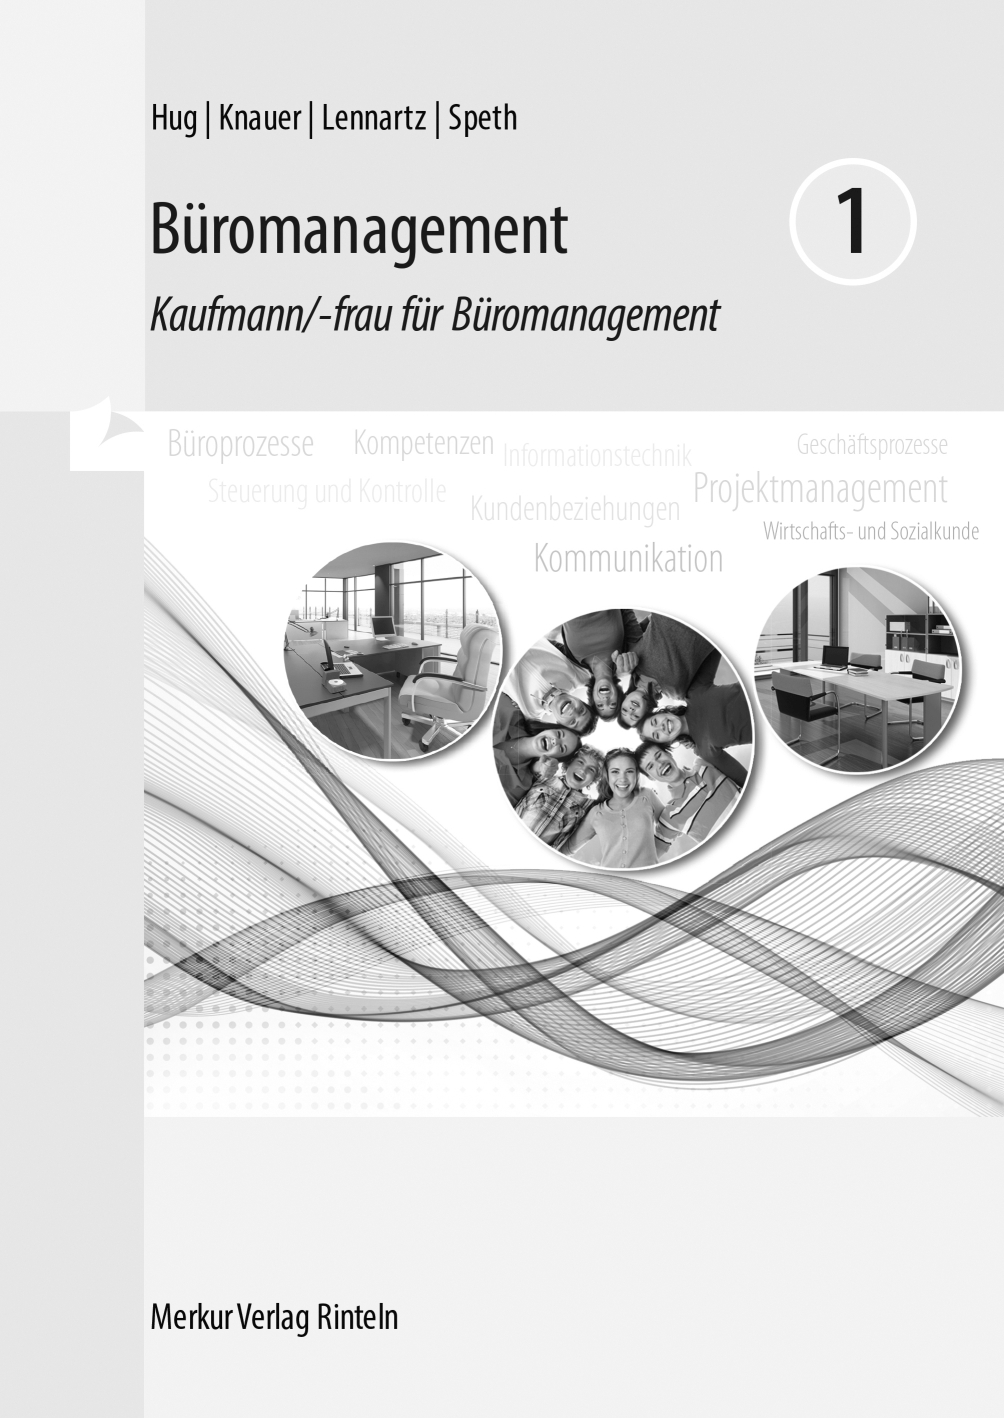 Büromanagement 1 Lernfelder 1-4 Kaufmann/-frau für Büromanagement -1. Ausbildungsjahr - Lösungen